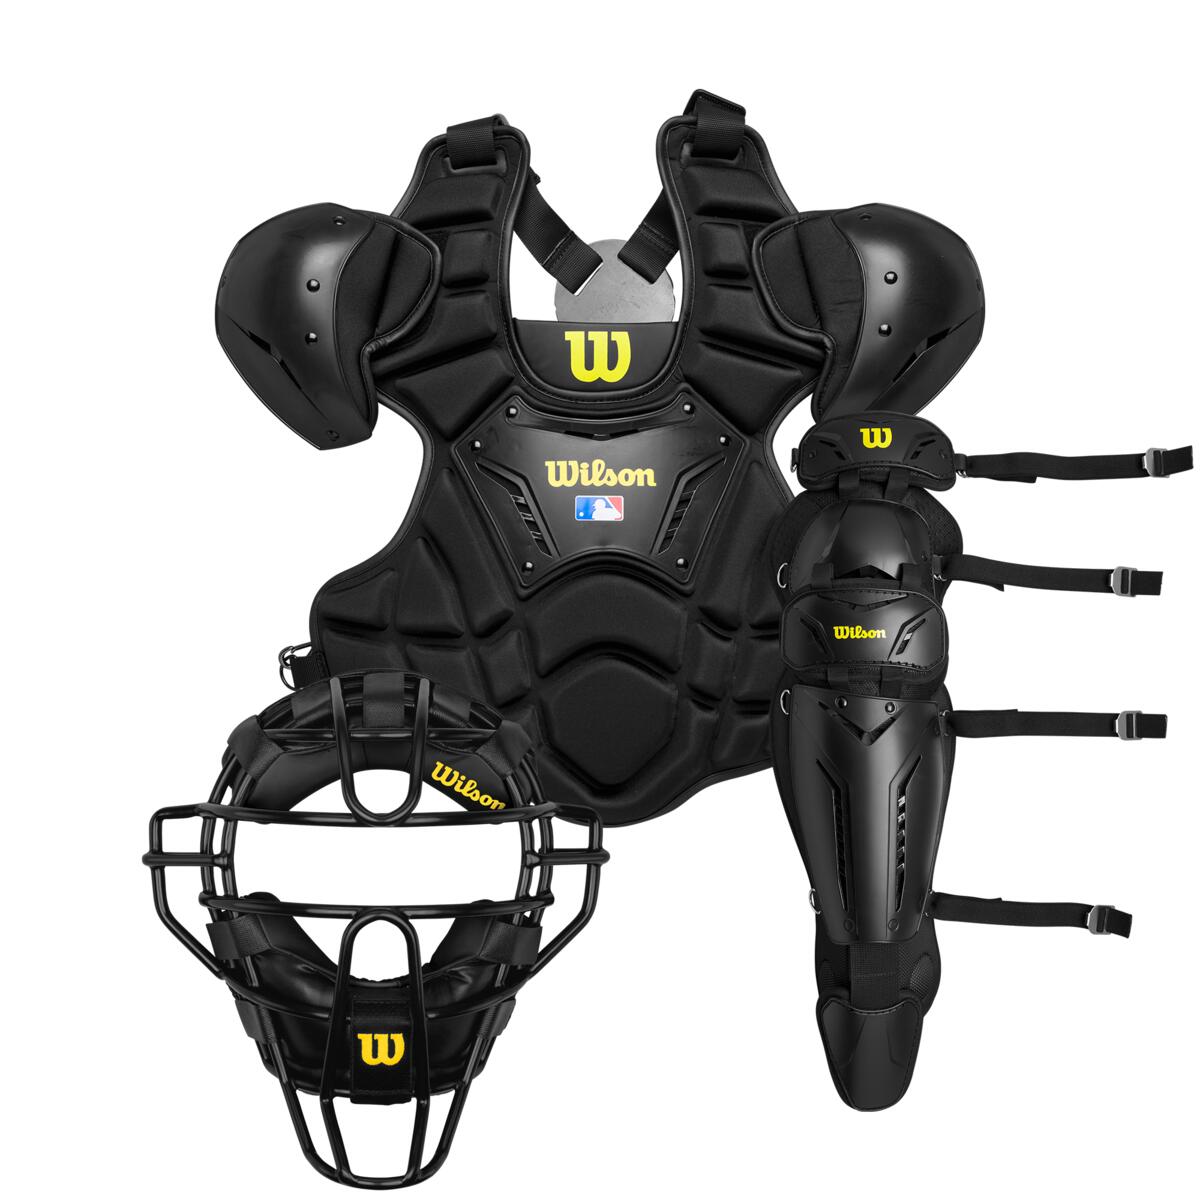 Wilson Kitted Umpire Gear